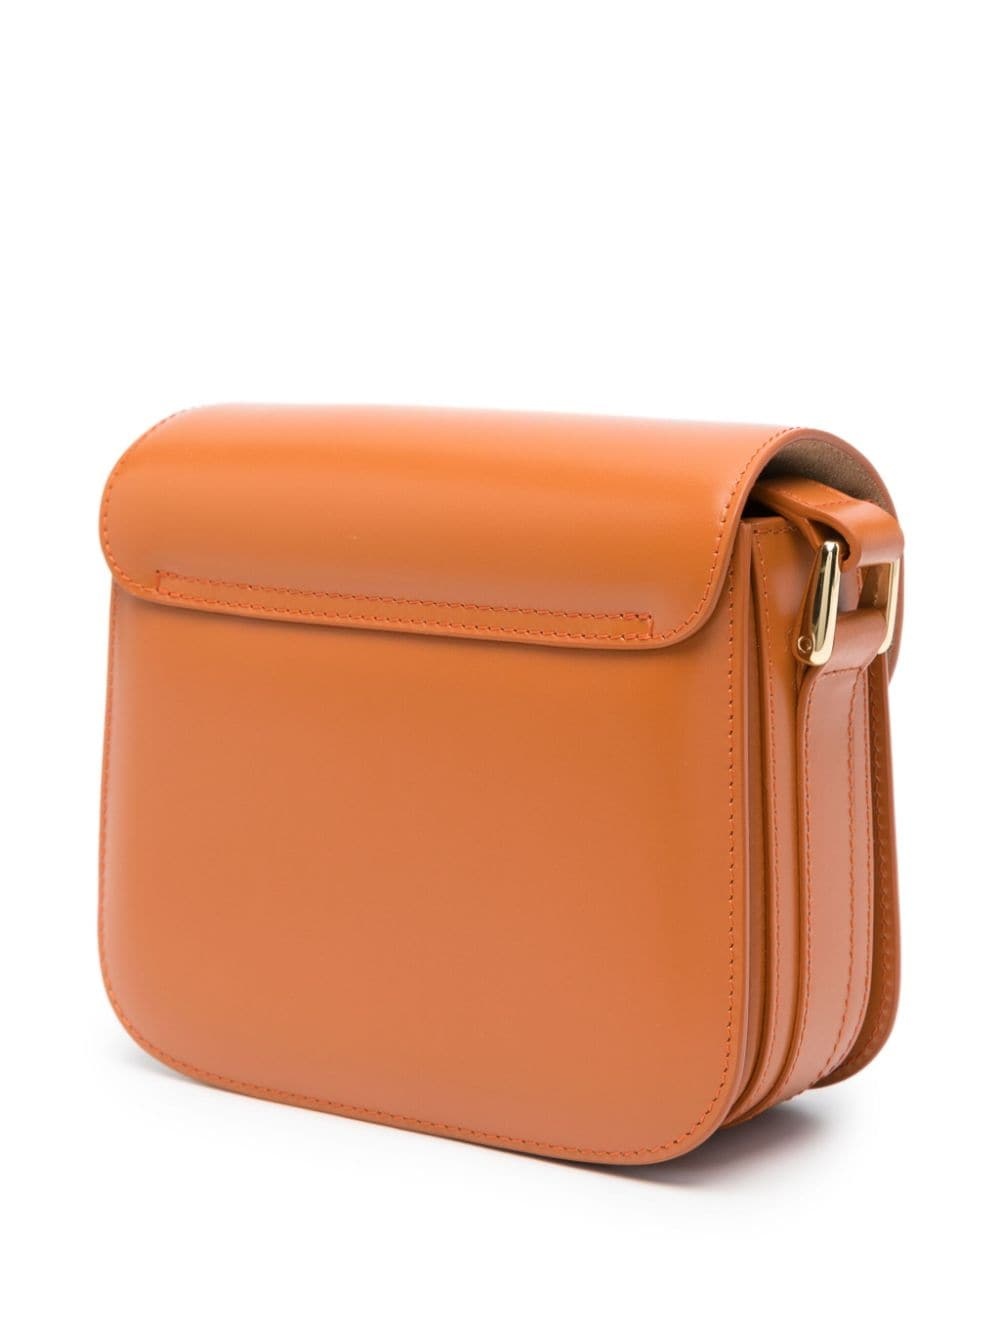 Grace leather mini bag - 3